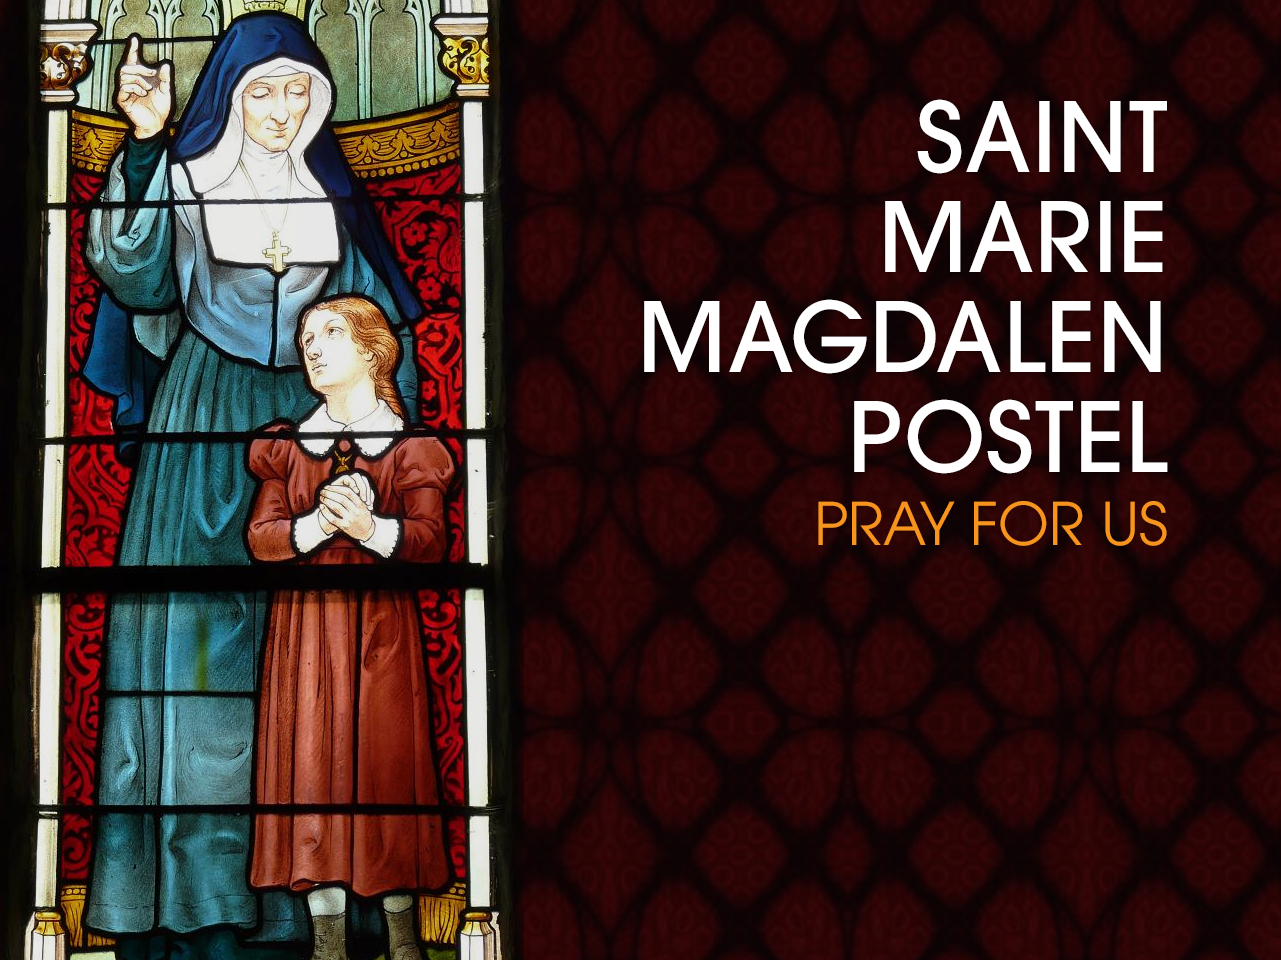 St. Marie Magdalen Postel